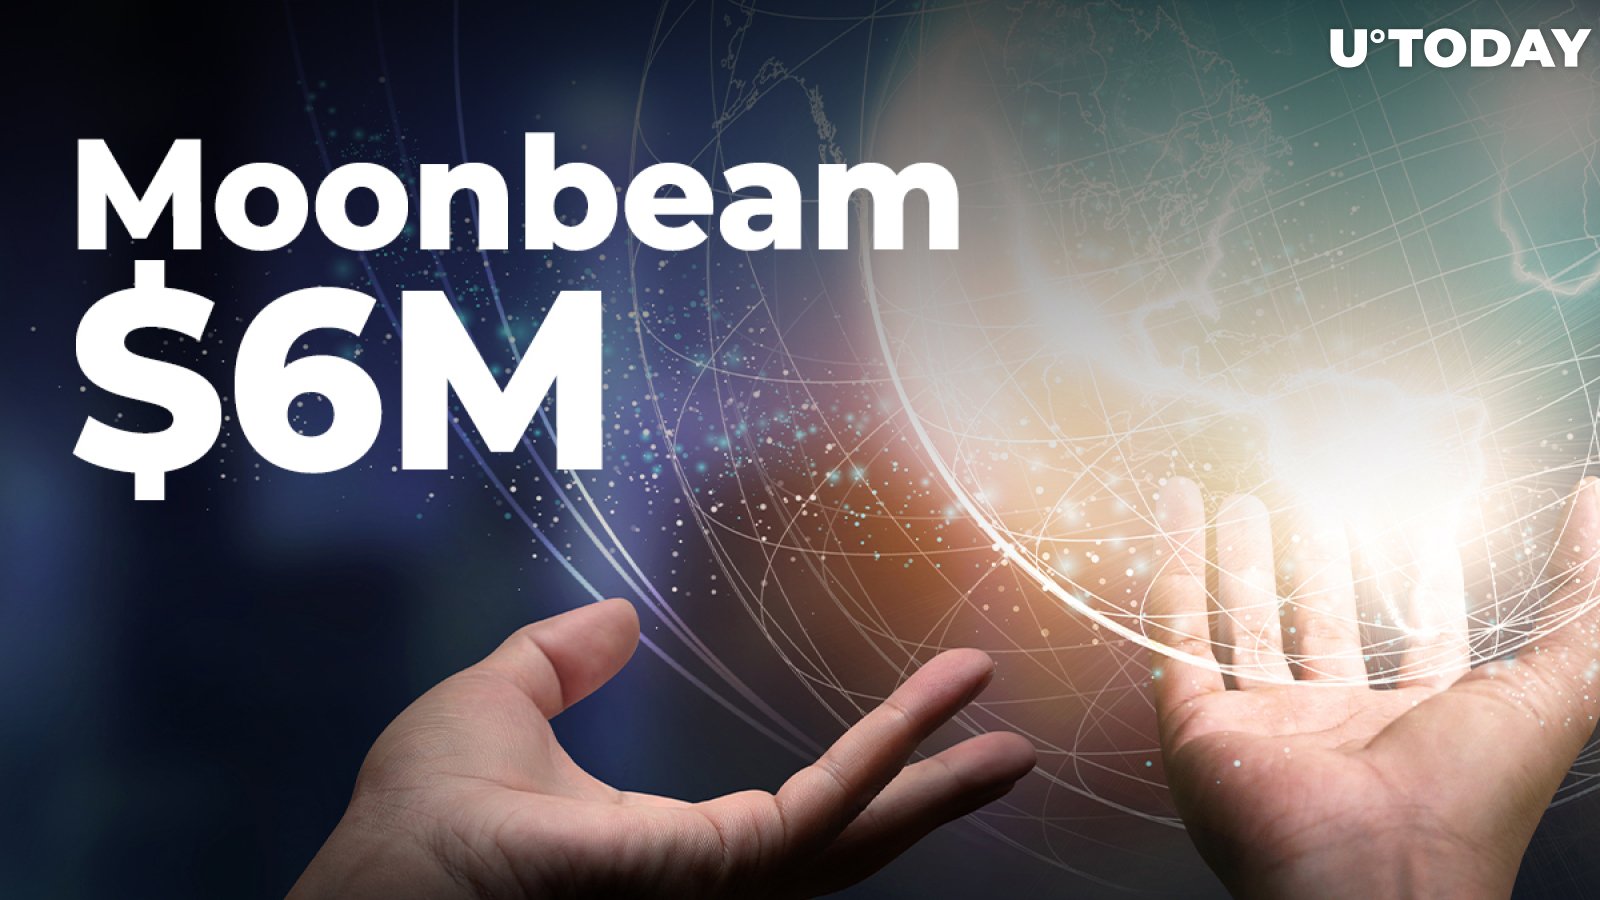 Binance, Coinbase Took Part in $6 Million Moonbeam Network Funding Round